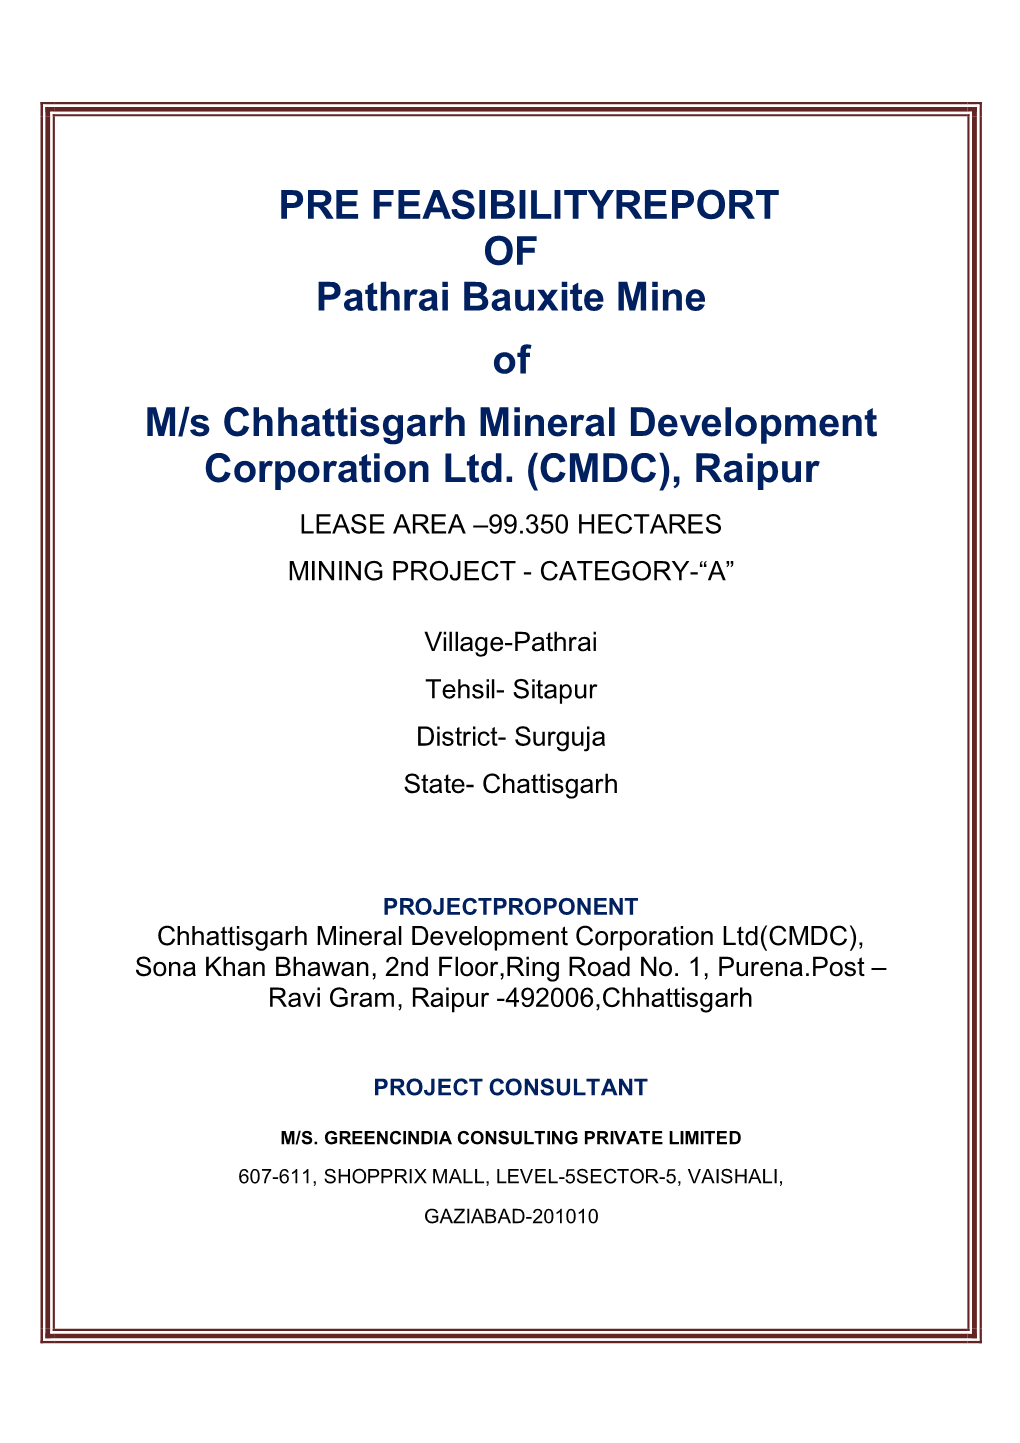 PRE FEASIBILITYREPORT of Pathrai Bauxite Mine of M/S Chhattisgarh Mineral Development Corporation Ltd